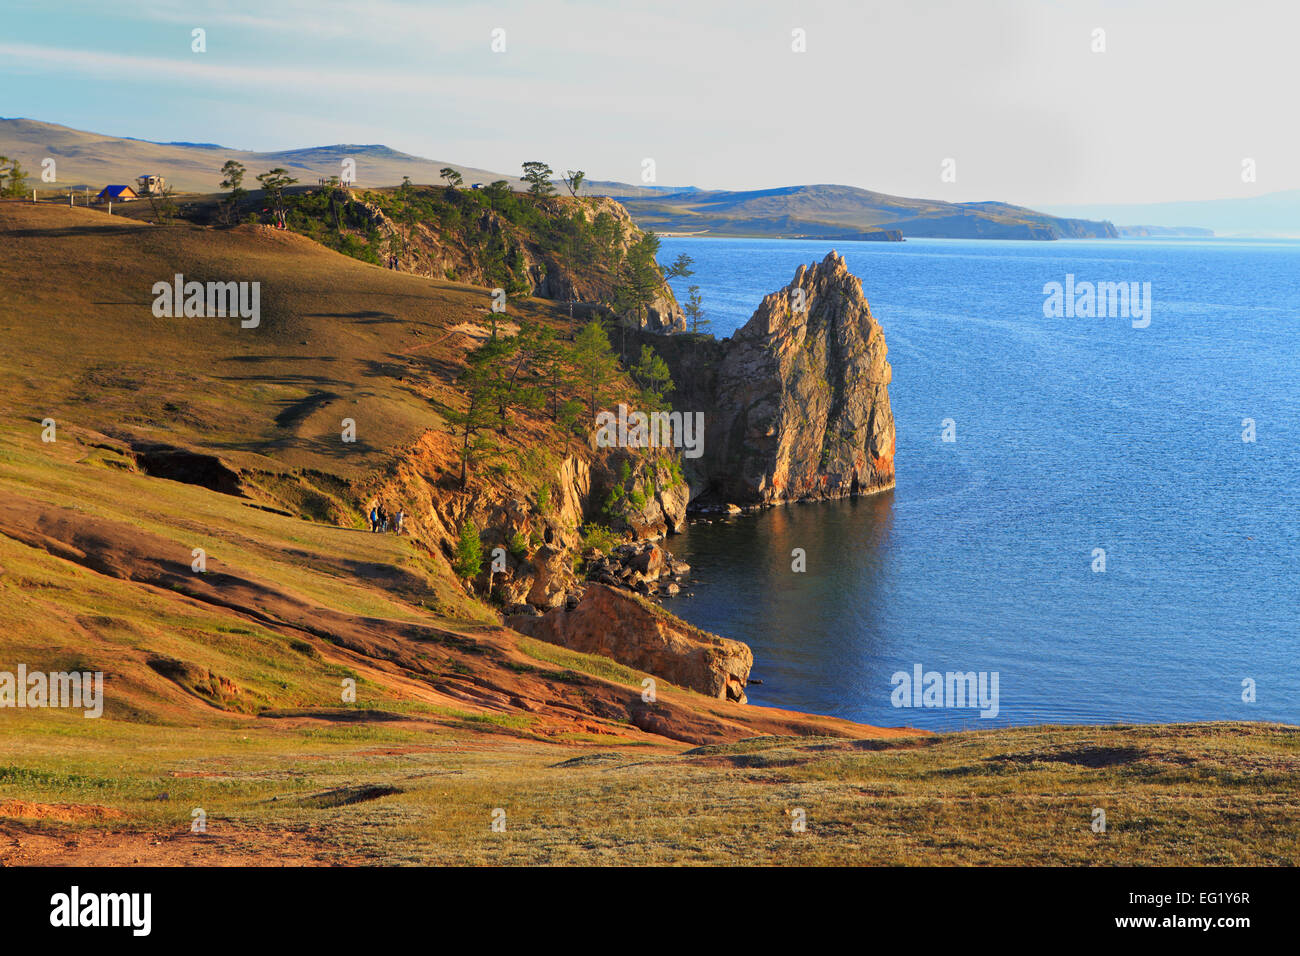 Olkhon island, landscape near Khuzhir, Baikal lake, Russia Stock Photo